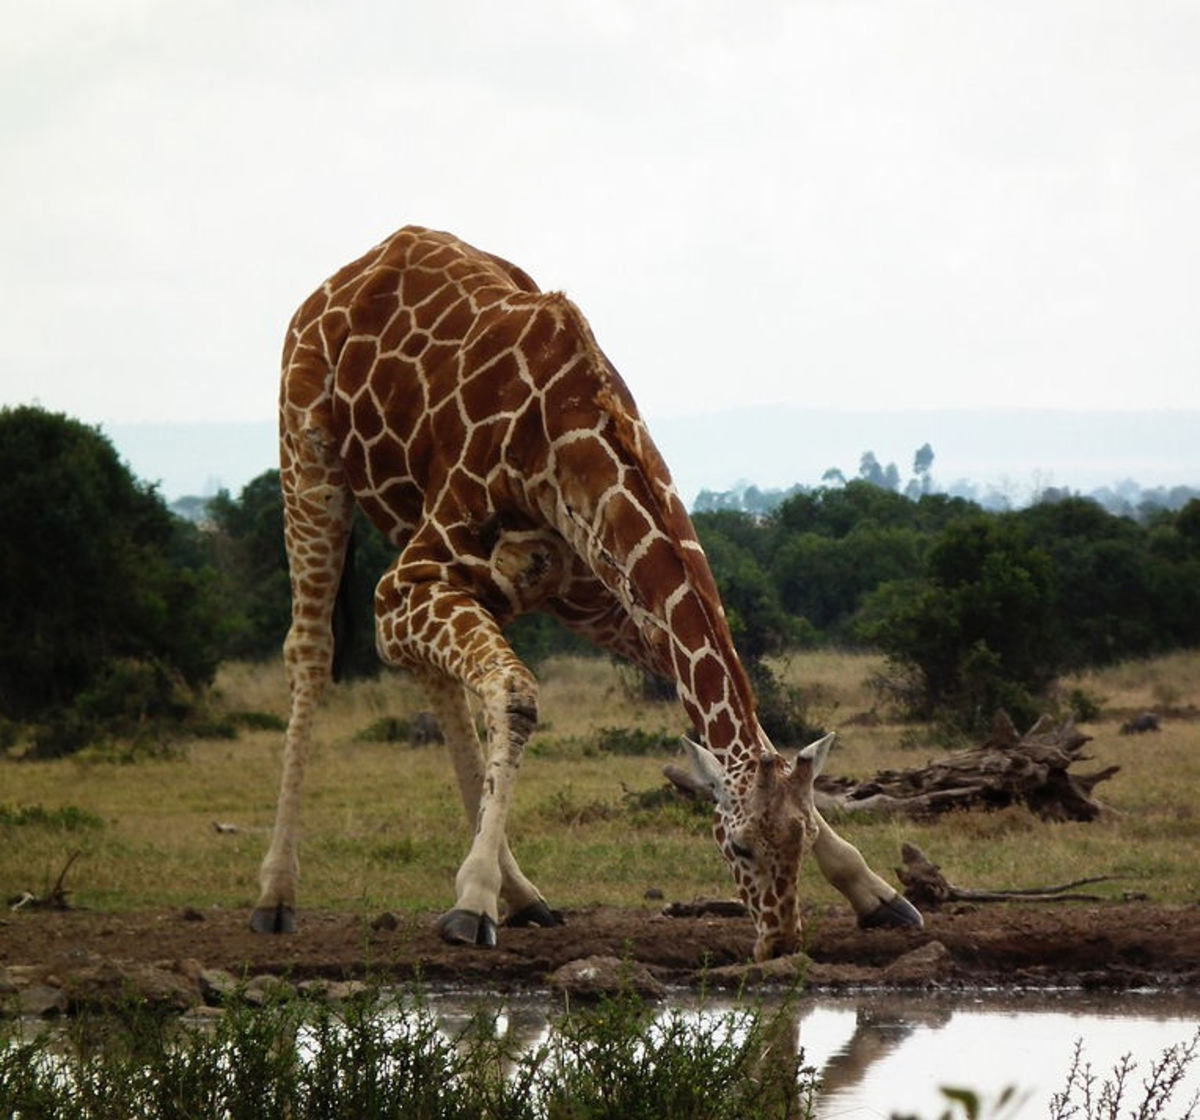 Adult giraffe drinking